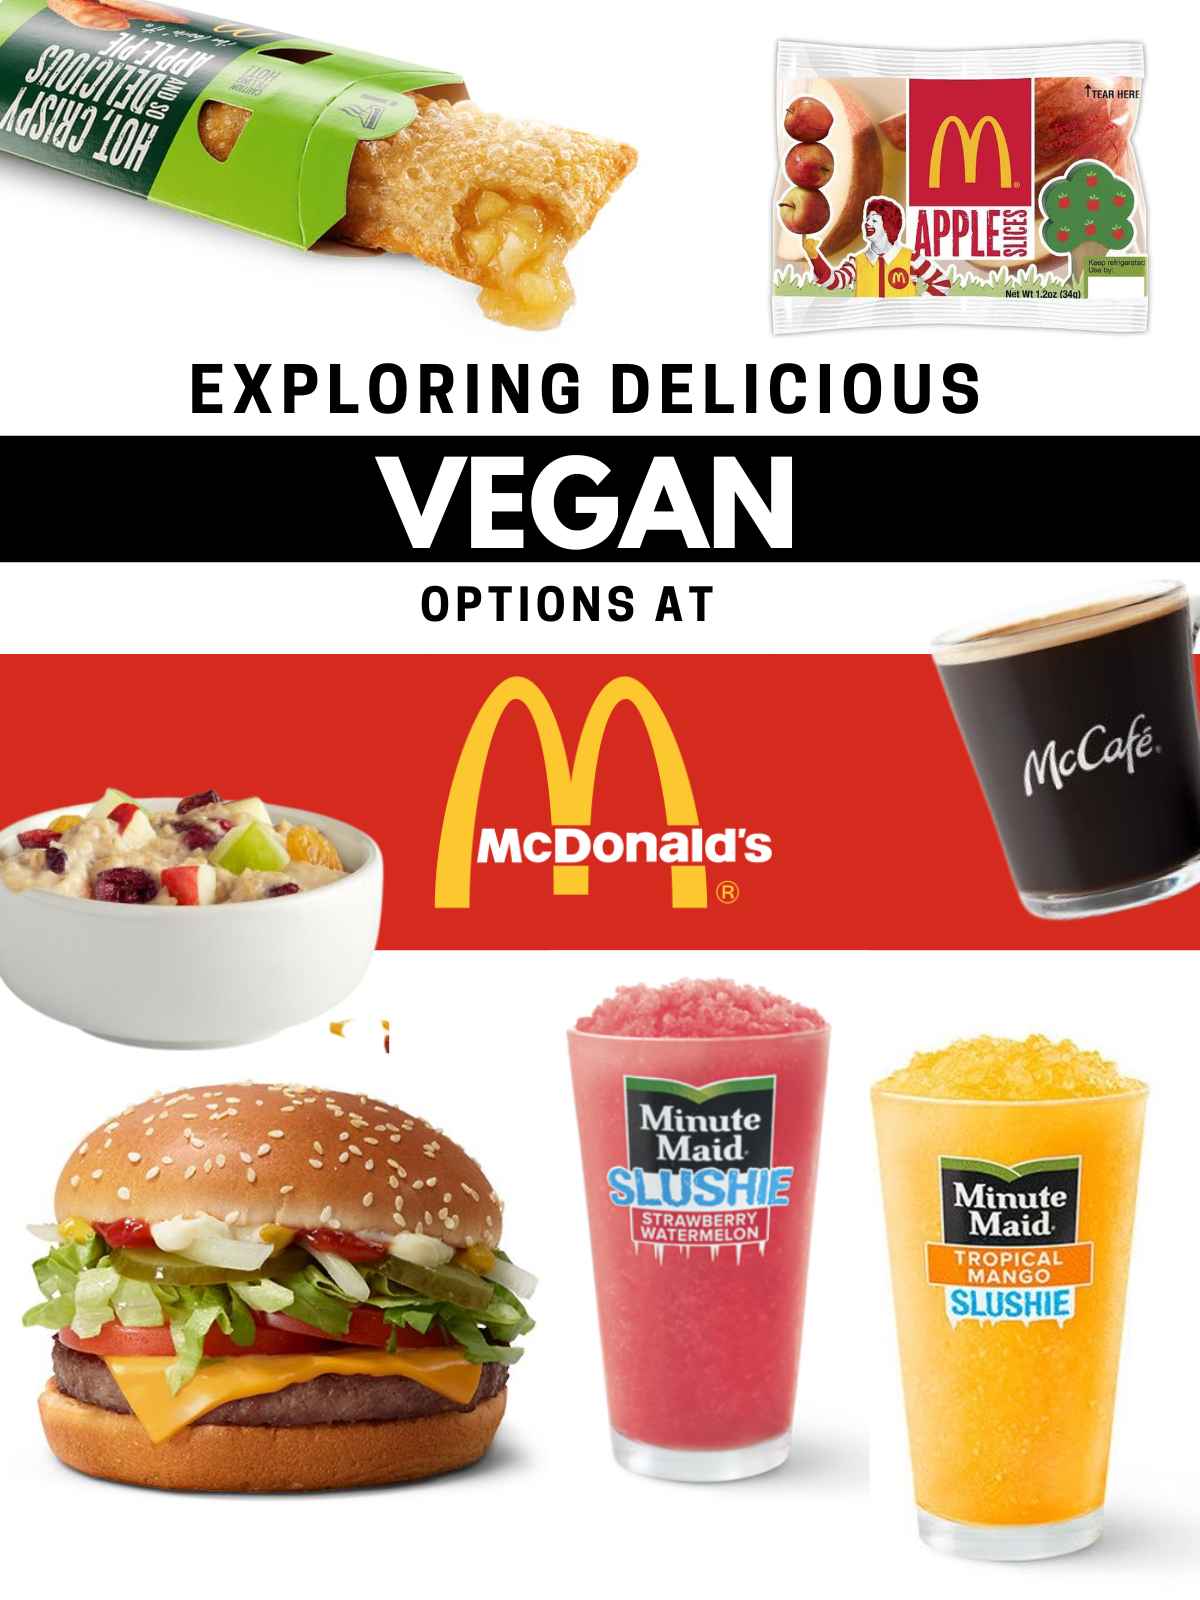 Banner showing McDonalds logo and vegan food options.